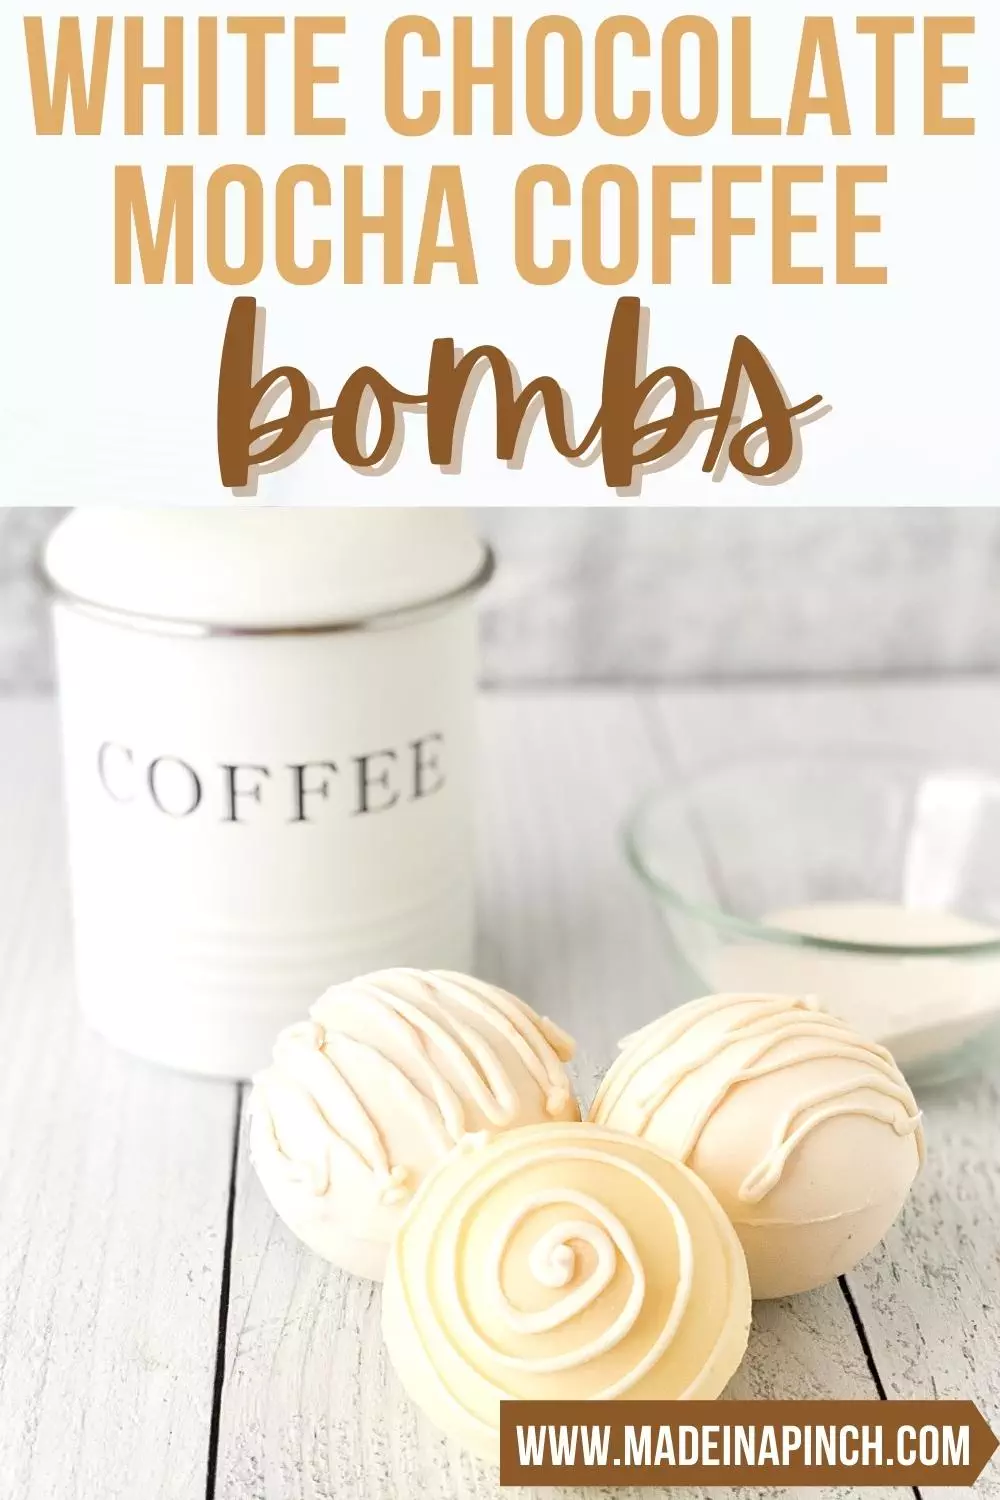 White chocolate mocha coffee bombs pin image